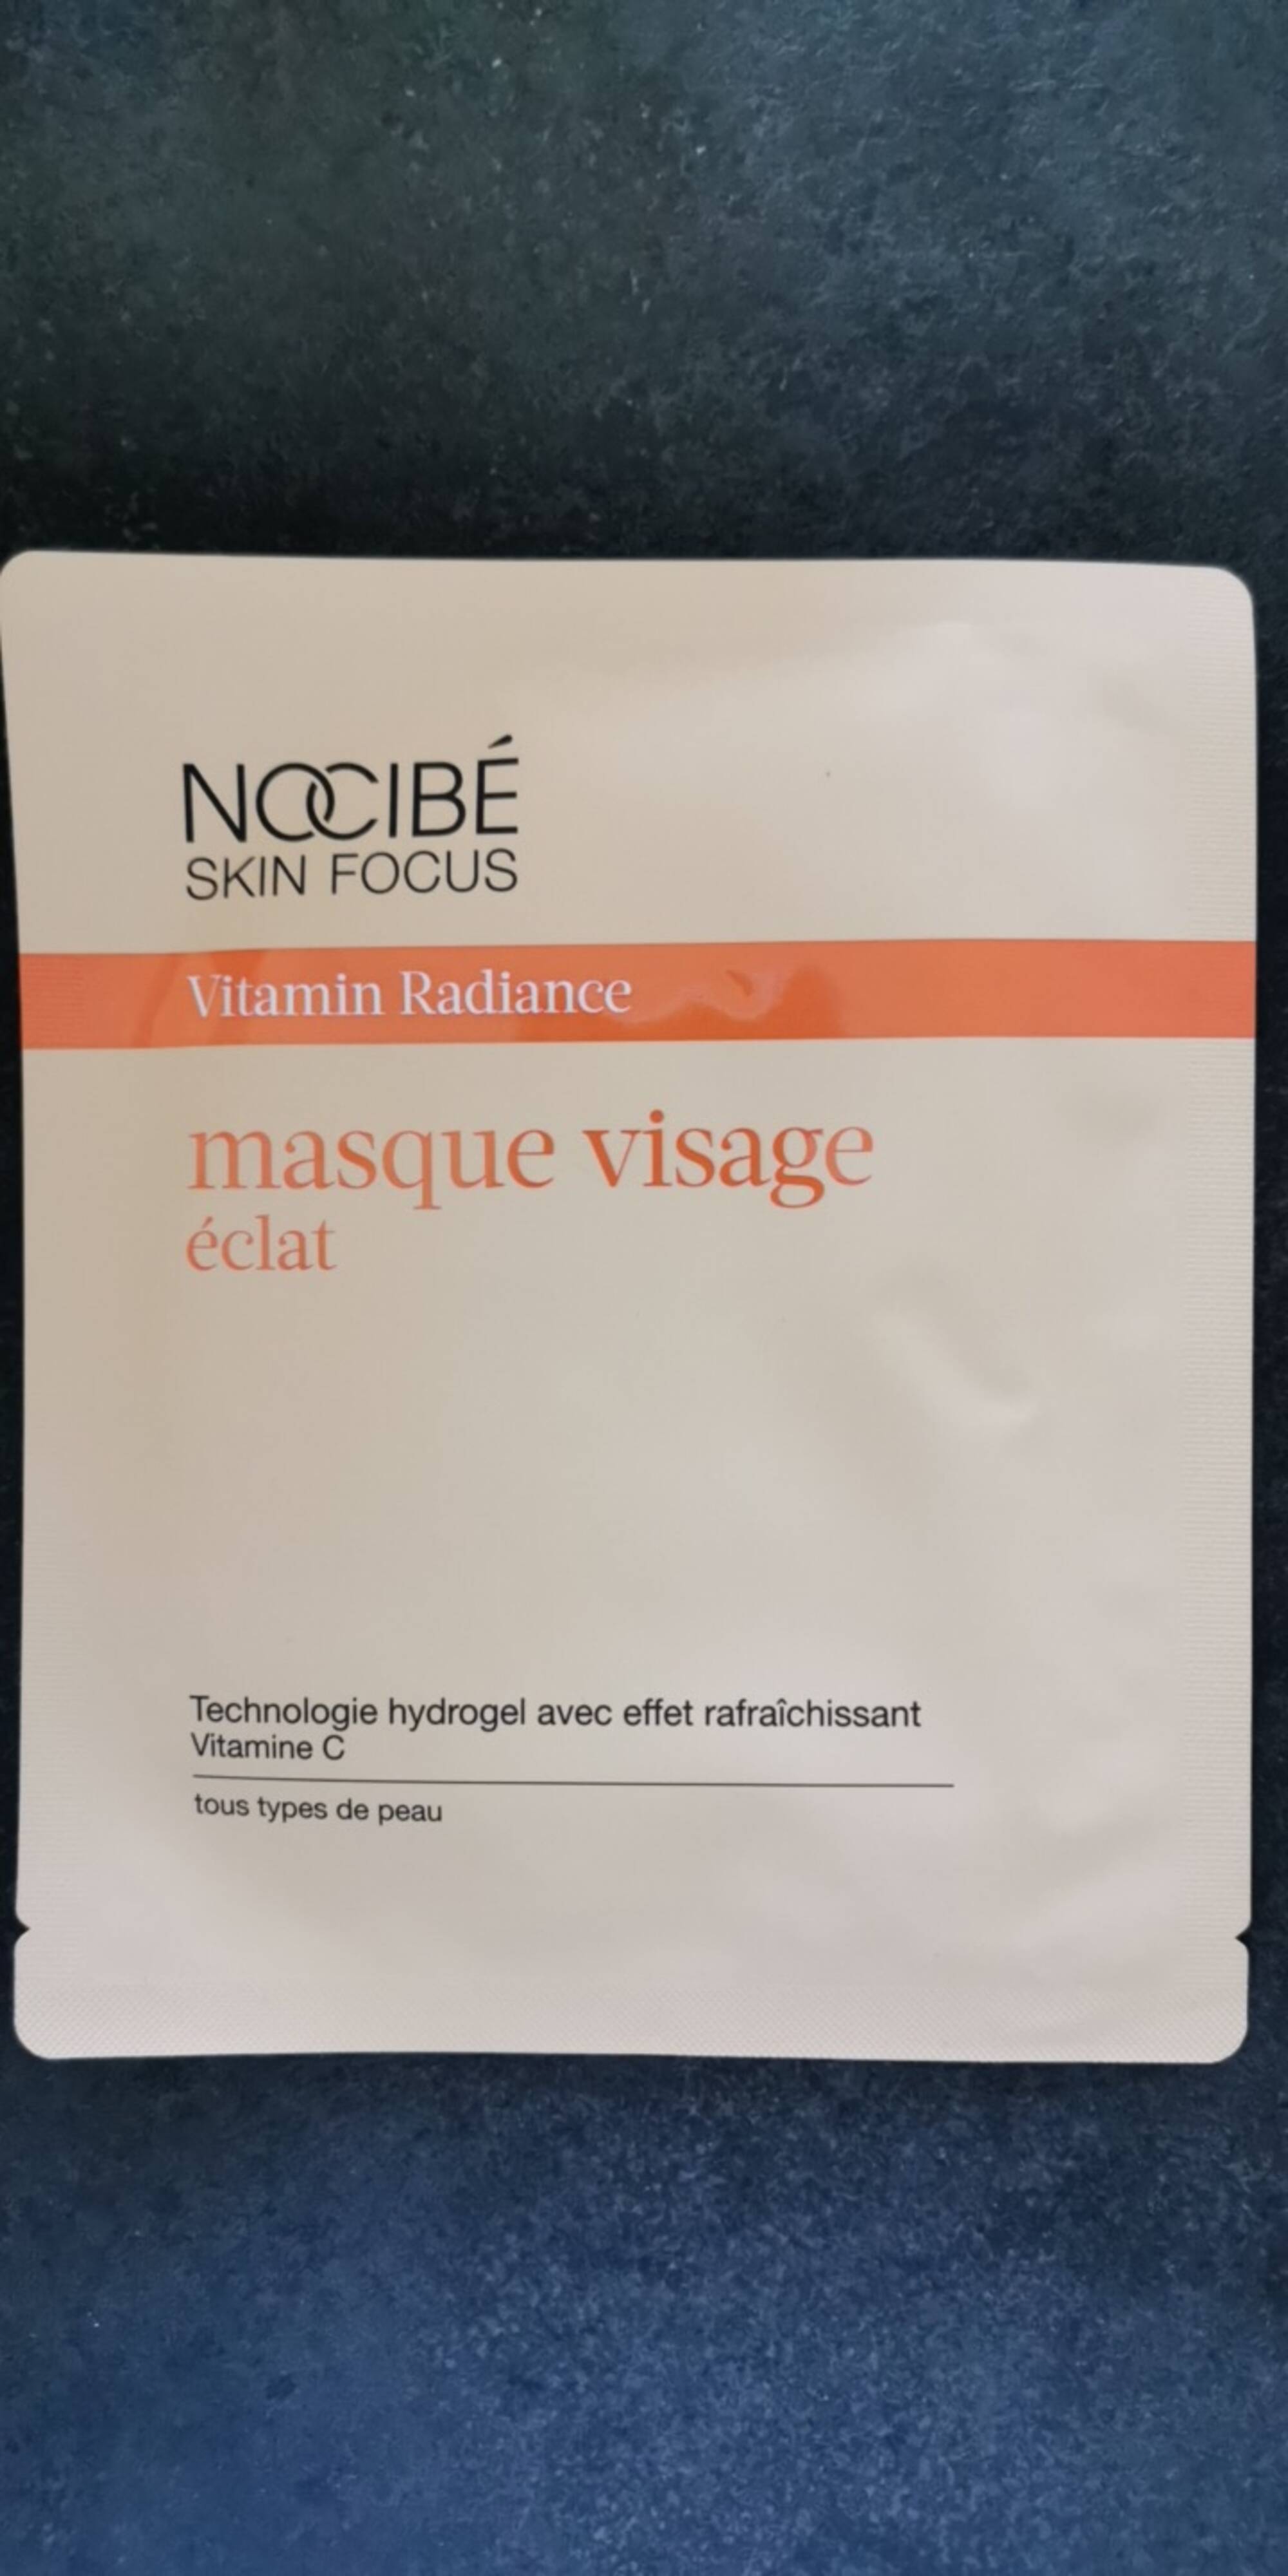 NOCIBÉ - Vitamin radiance - Masque visage éclat